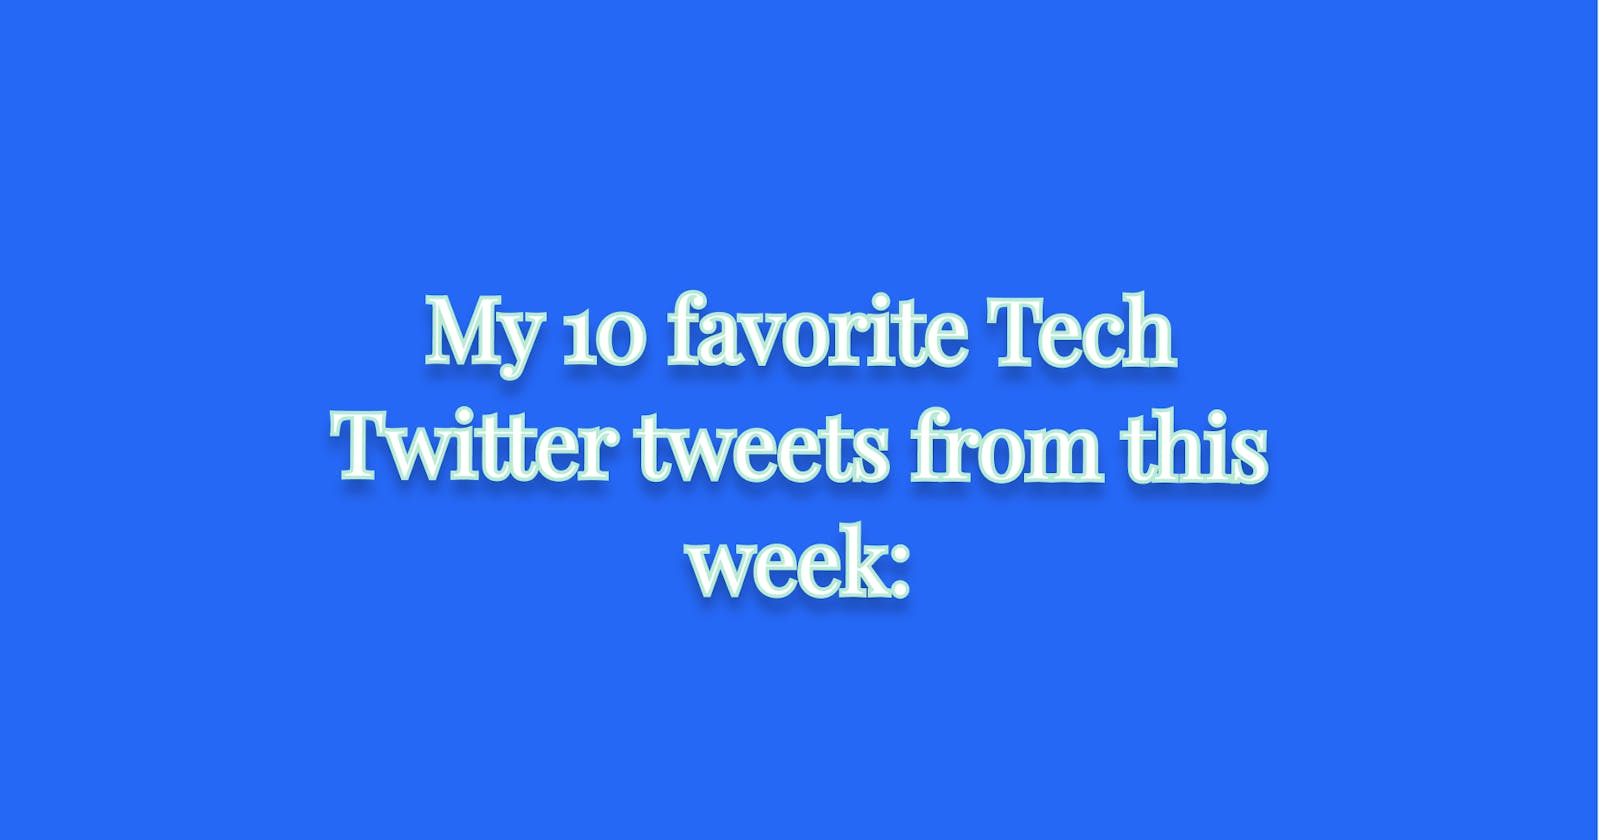 My 10 favorite Tech Twitter tweets from this week